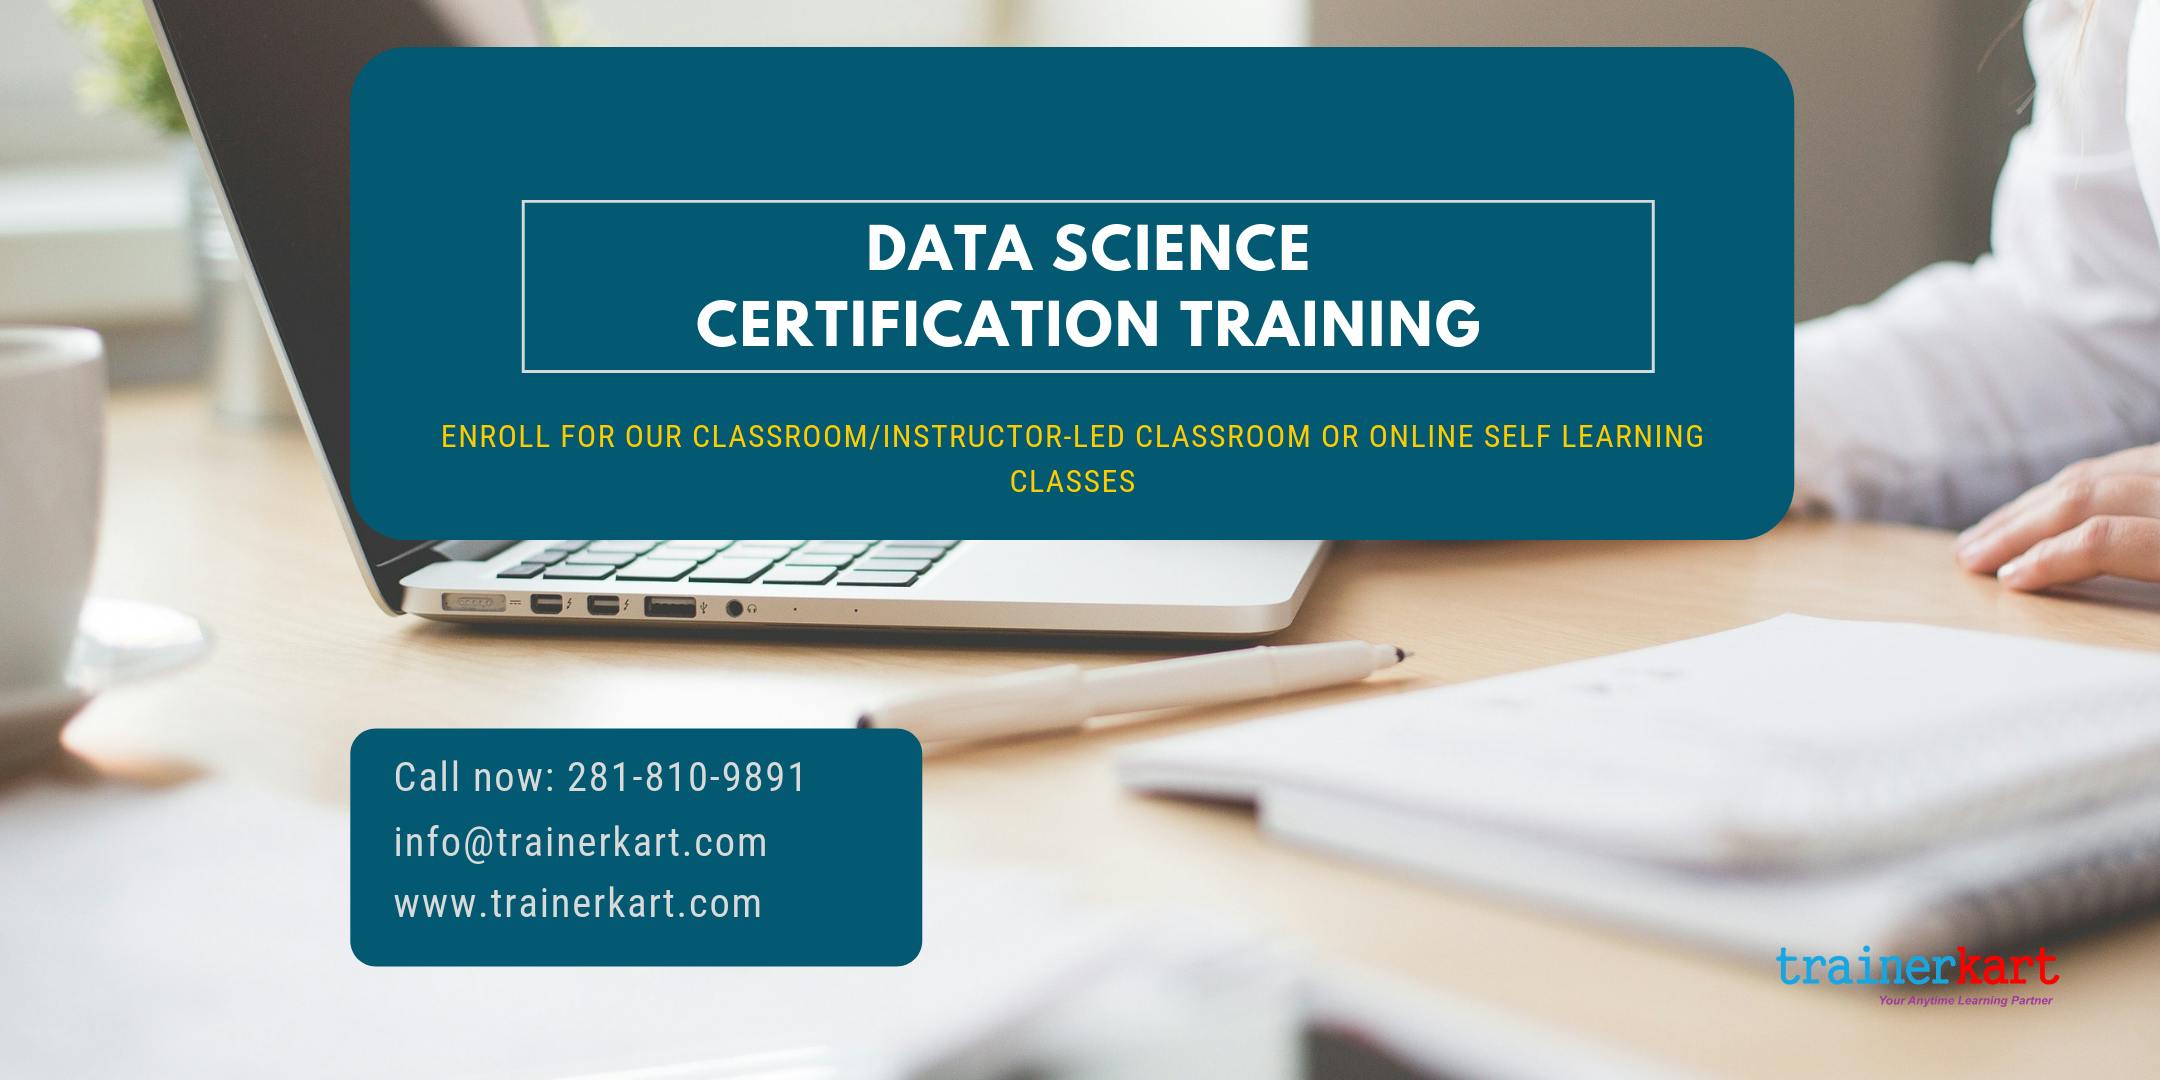 Data Science Certification Training in St. Petersburg, FL